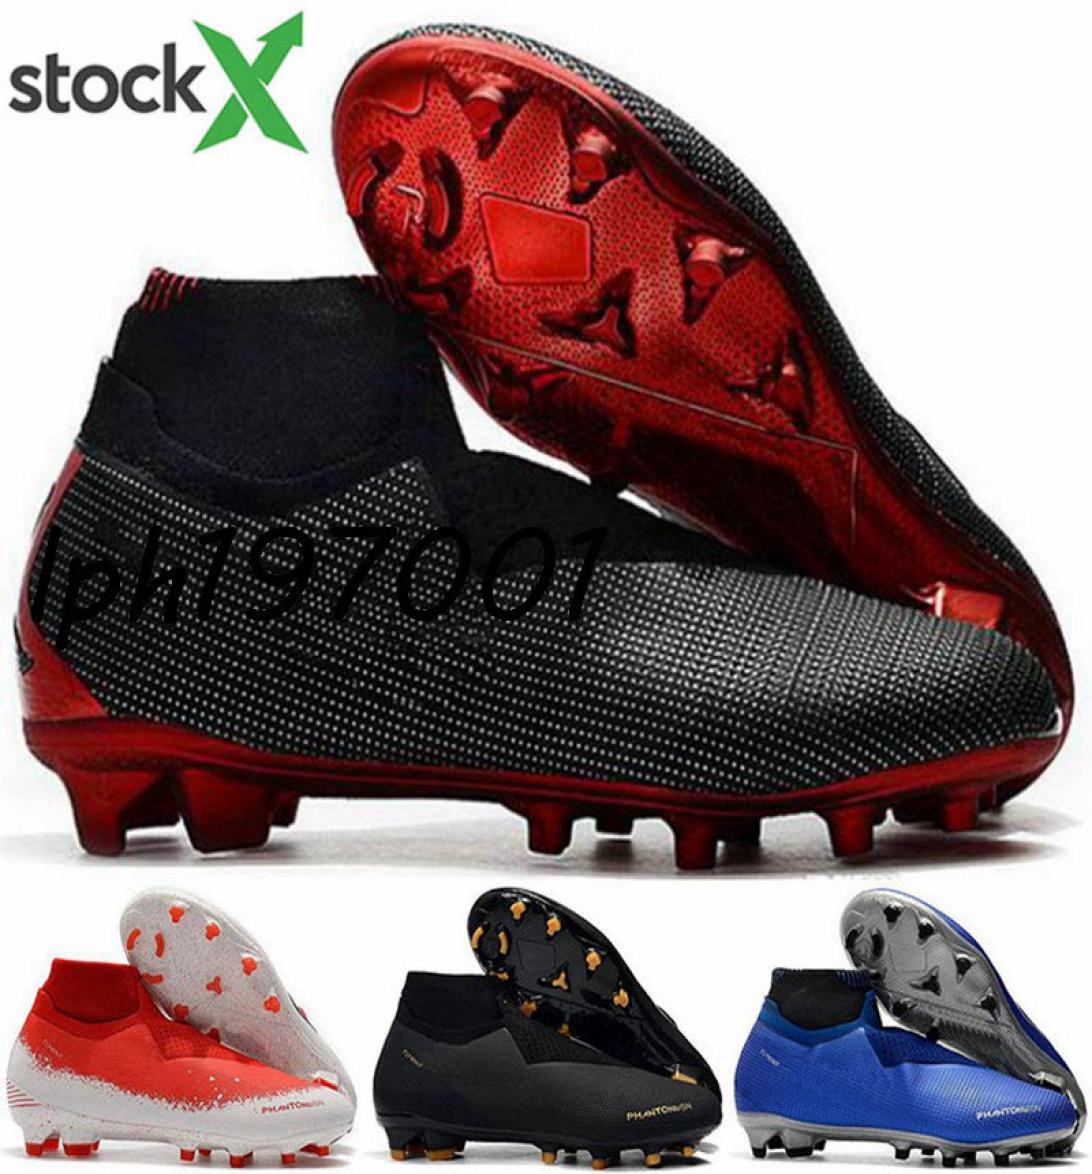 

FG AG size us 12 Men eur 46 football boots Mens New Arrival 2020 Shoes soccer cleats enfant Athletic Purple Phantom VSN Elite cram6881256, Gold